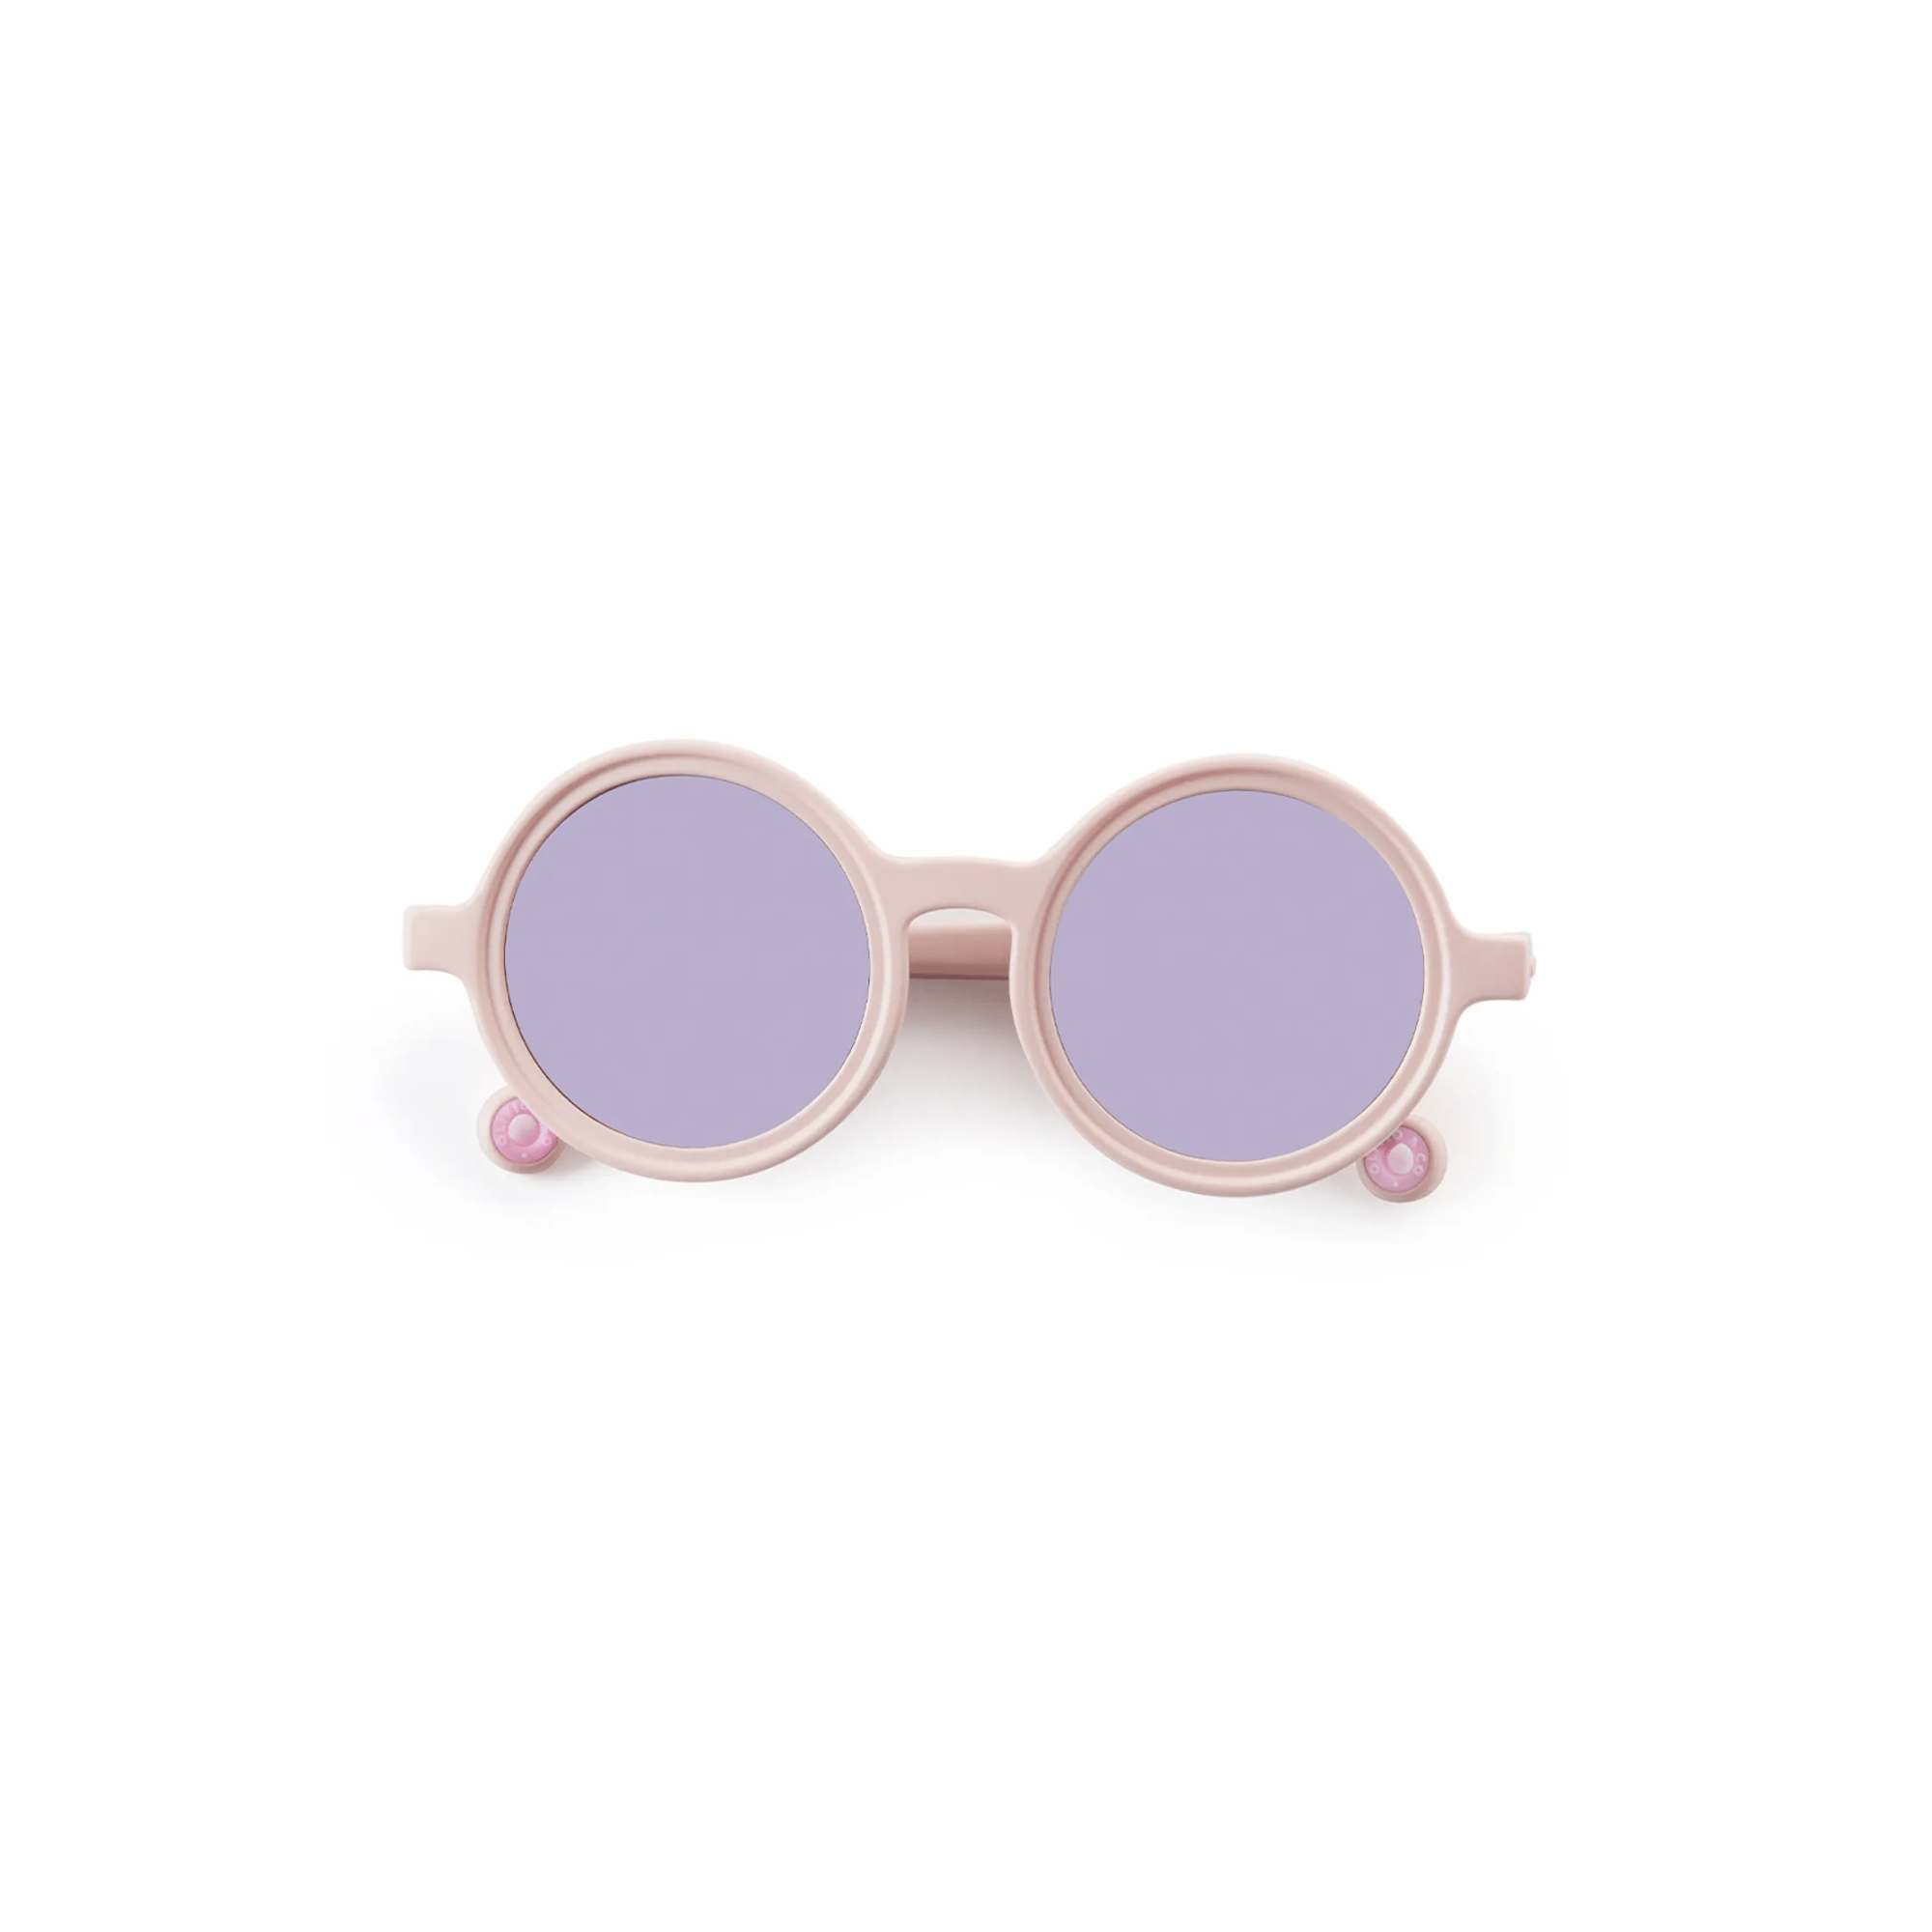 Kids Round Sunglasses - Shell Pink